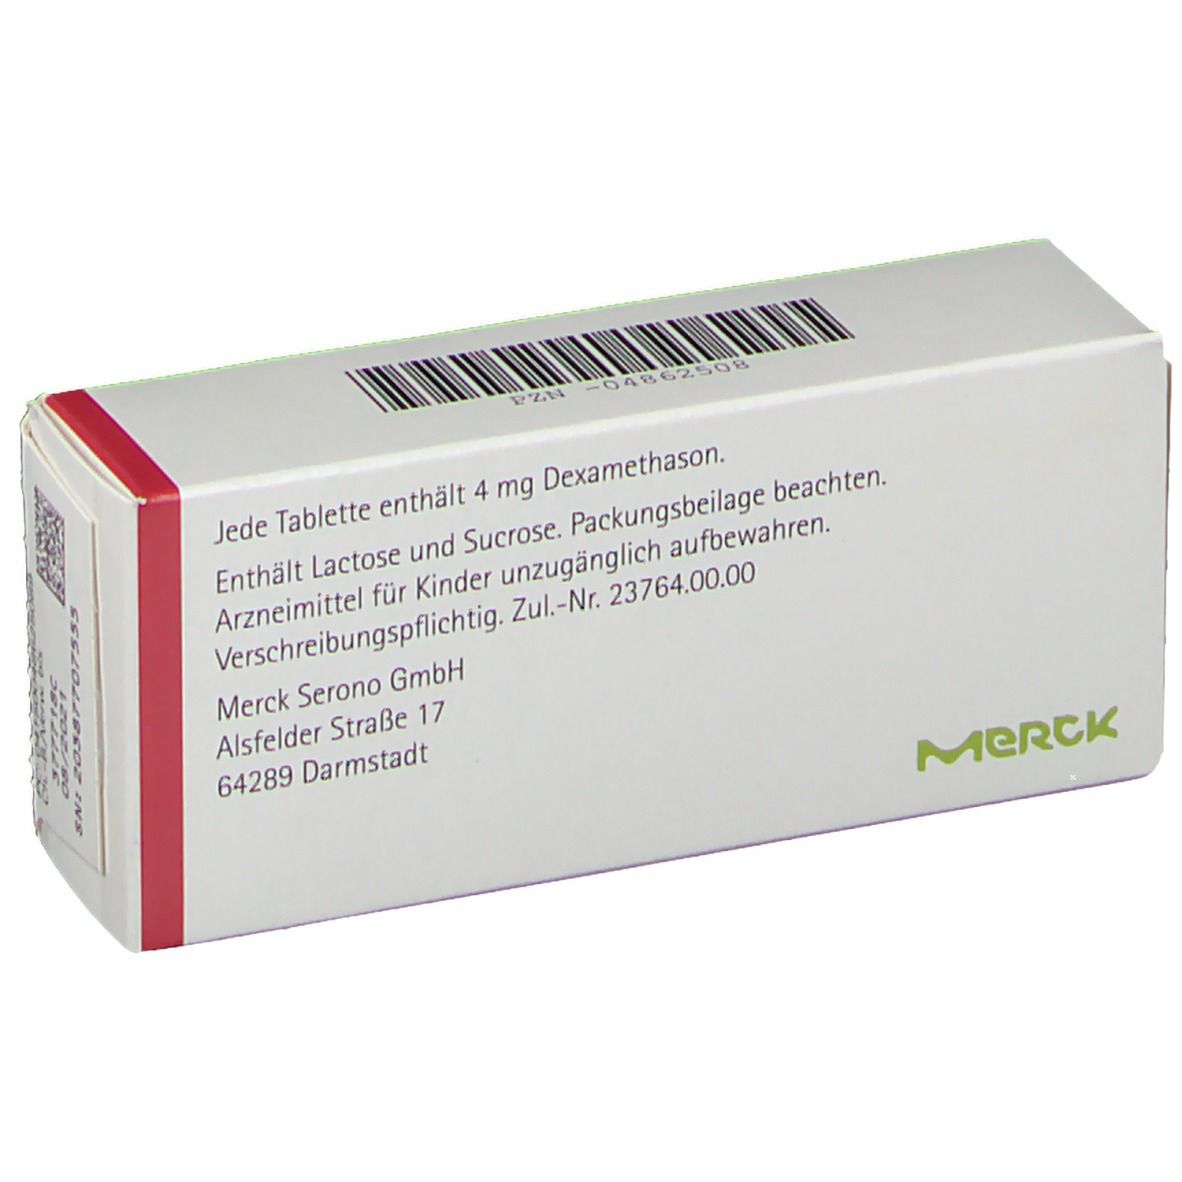 Fortecortin® 4 mg